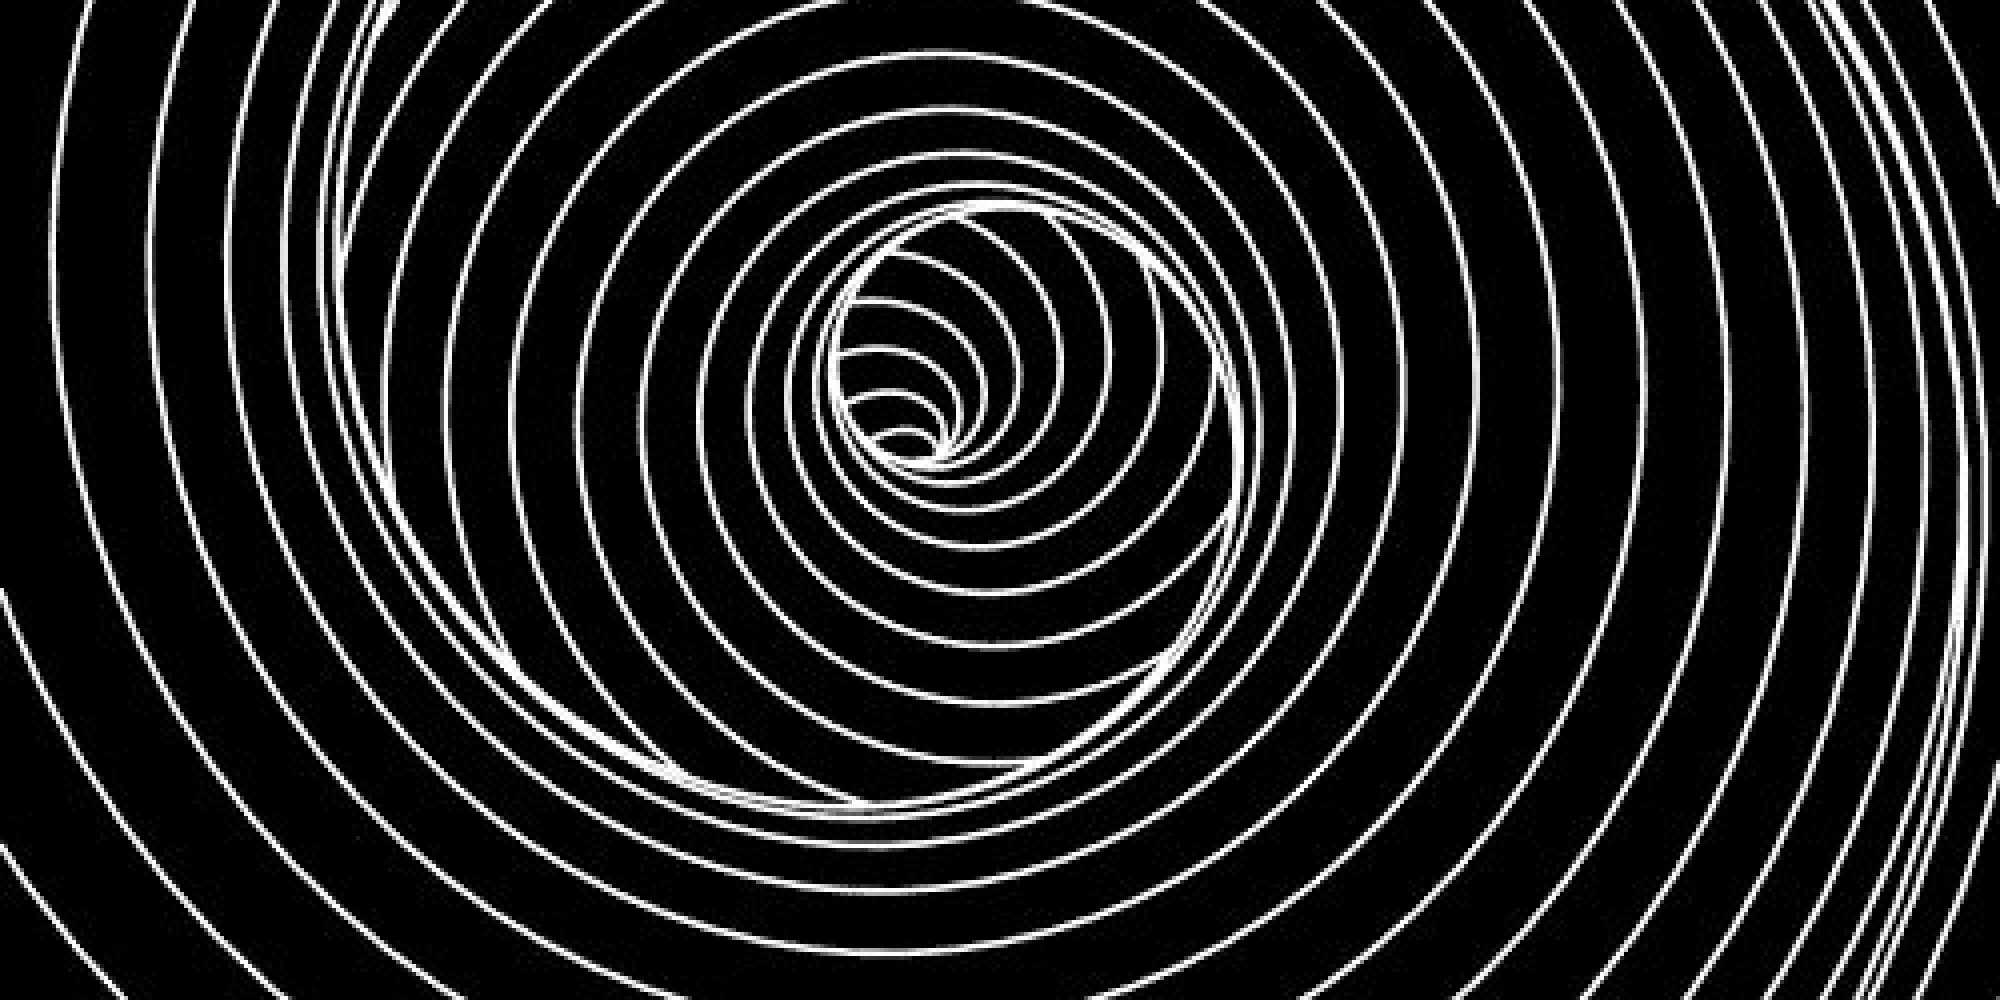 hypnotize image